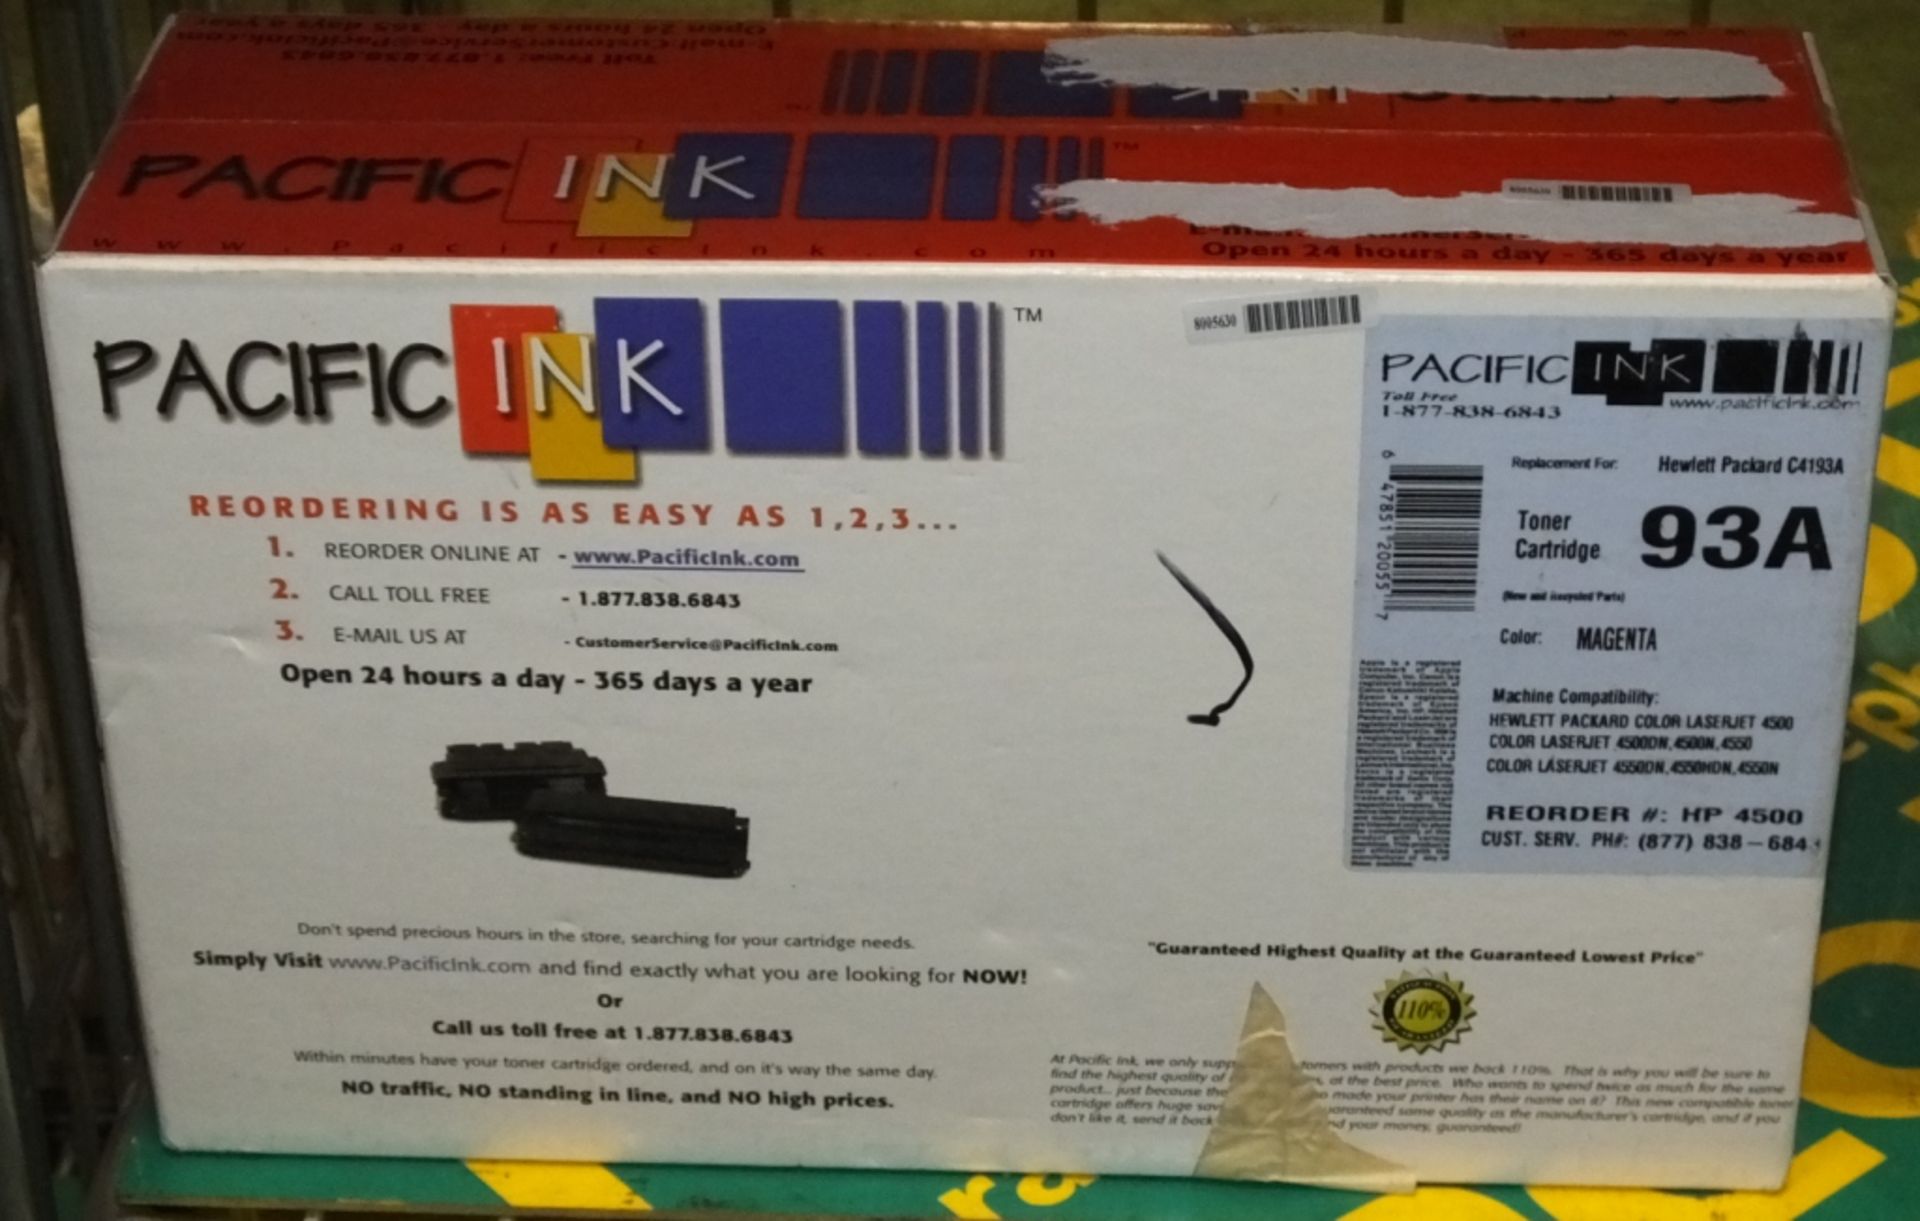 Pacific Ink toner cartridge 93A magenta, Premier (HP Compatible) 4500 series black toner c - Image 2 of 5